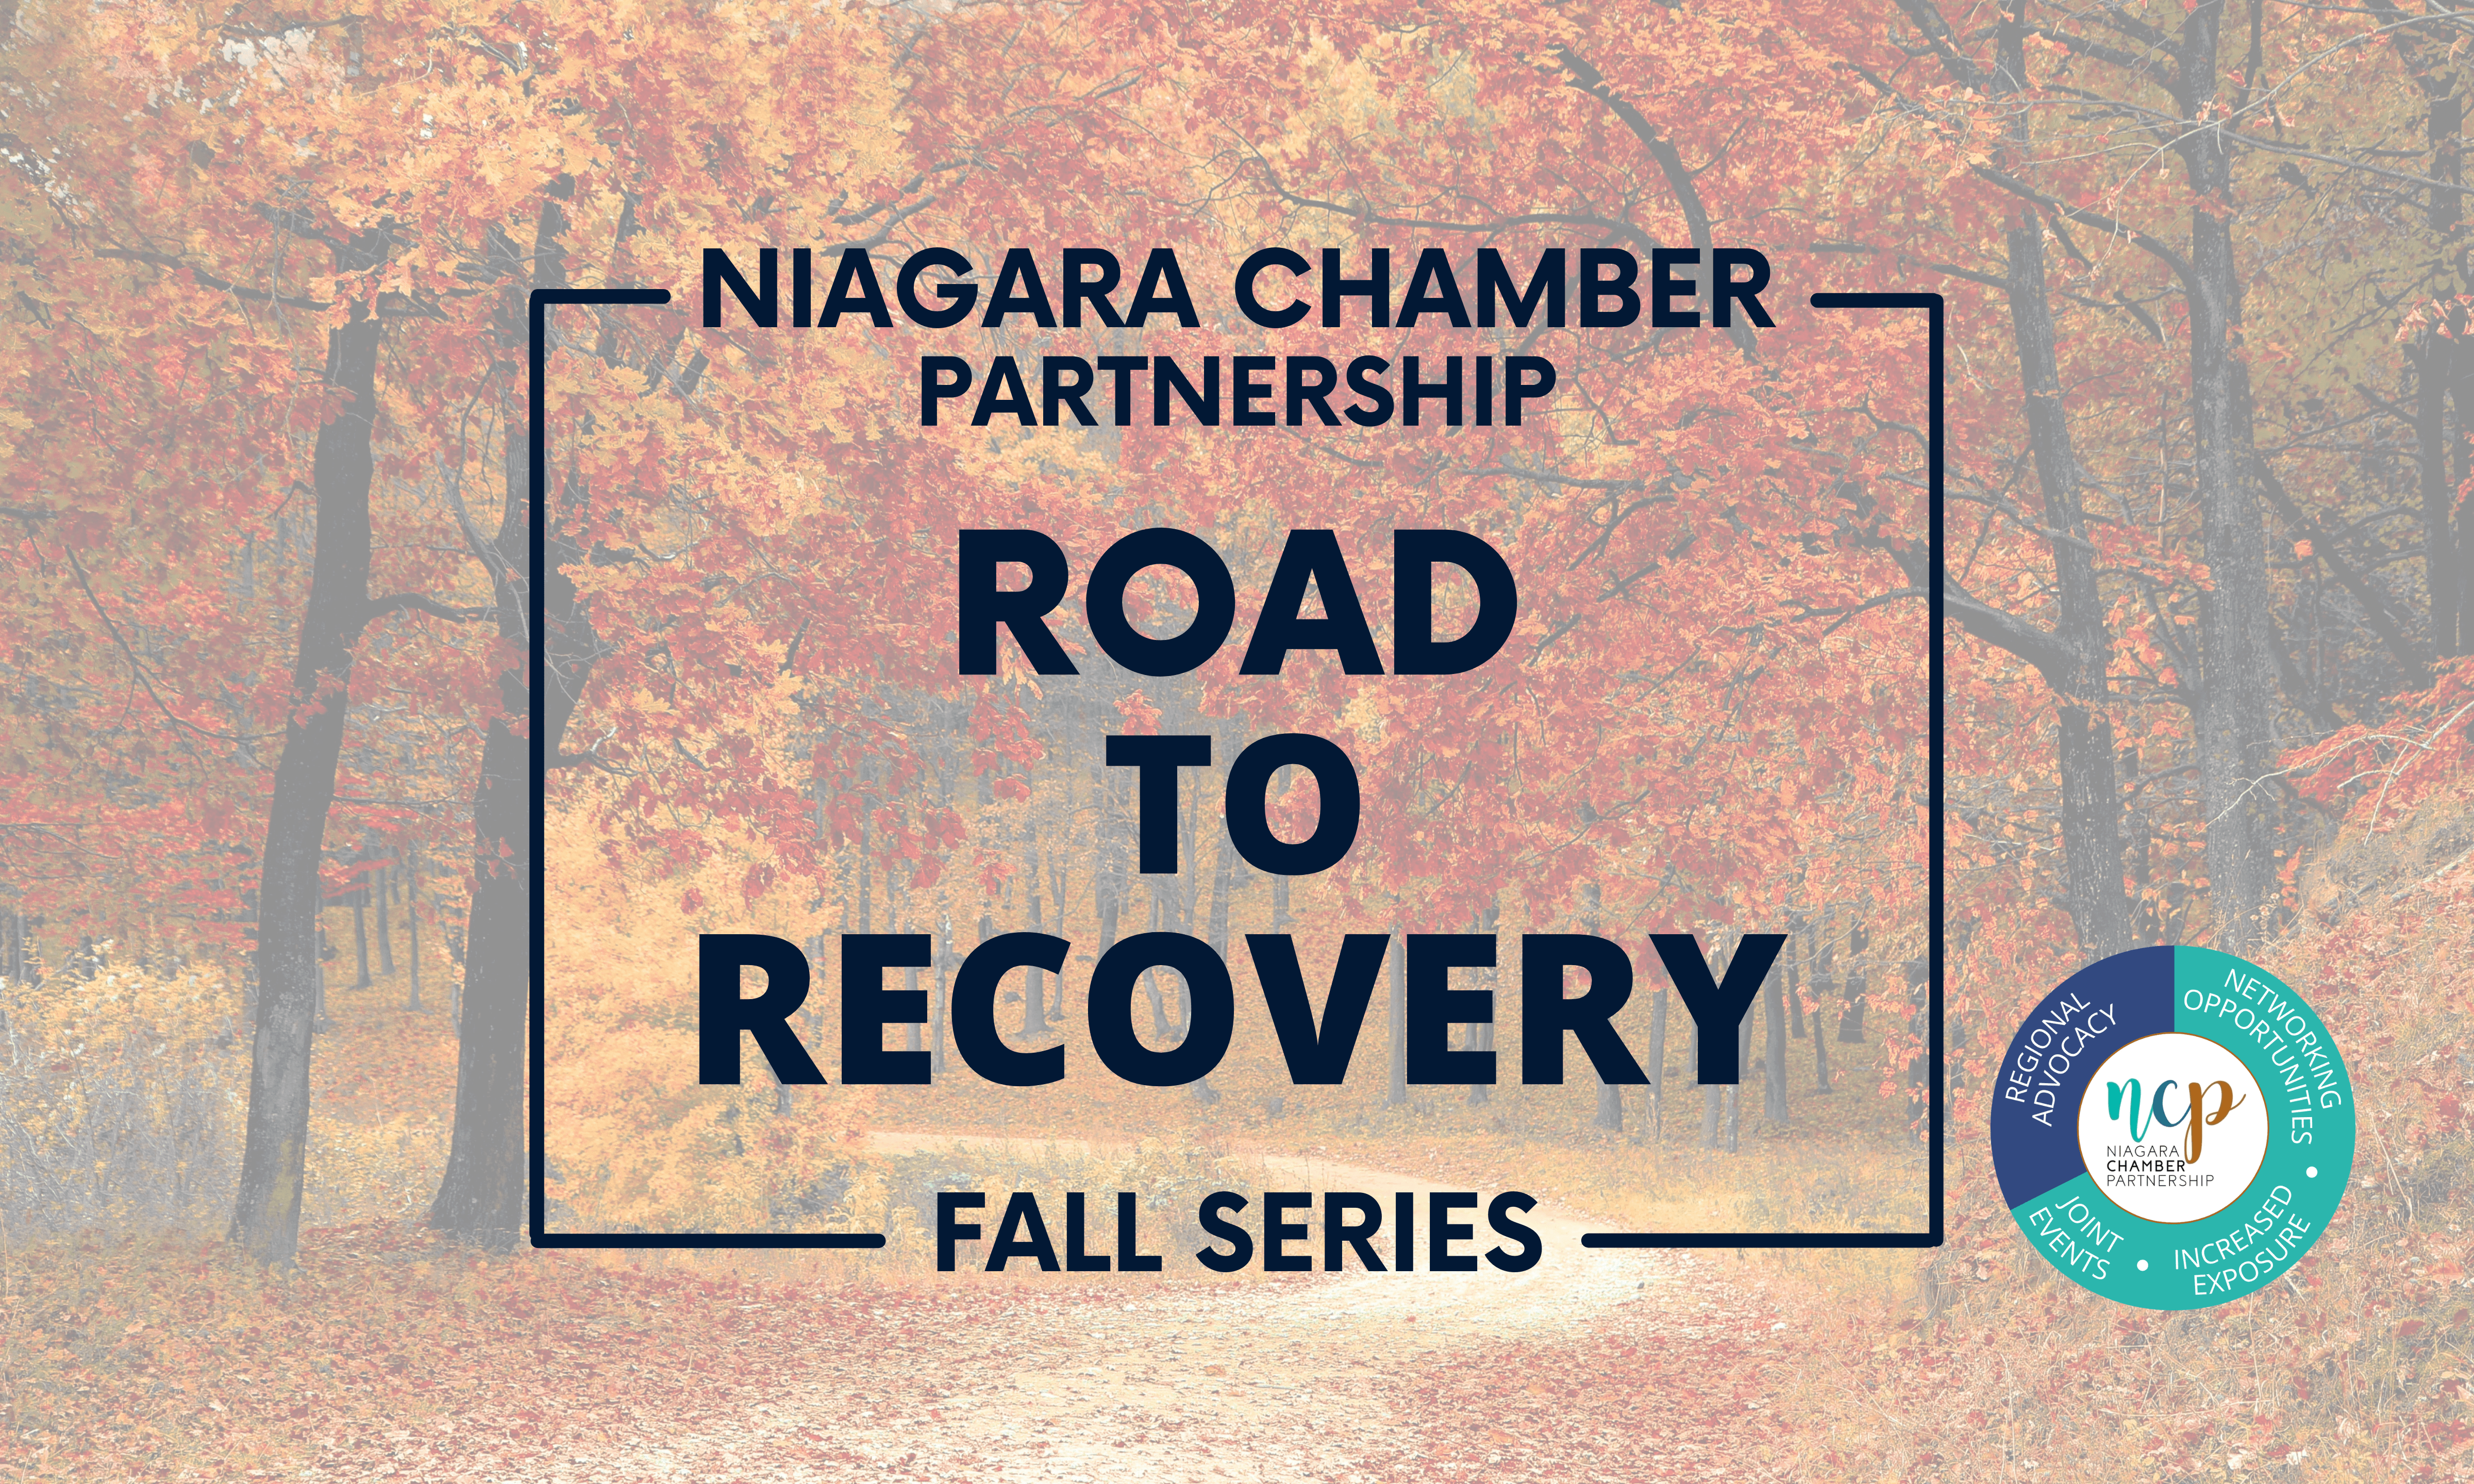 Niagara’s Road to Recovery Fall Series